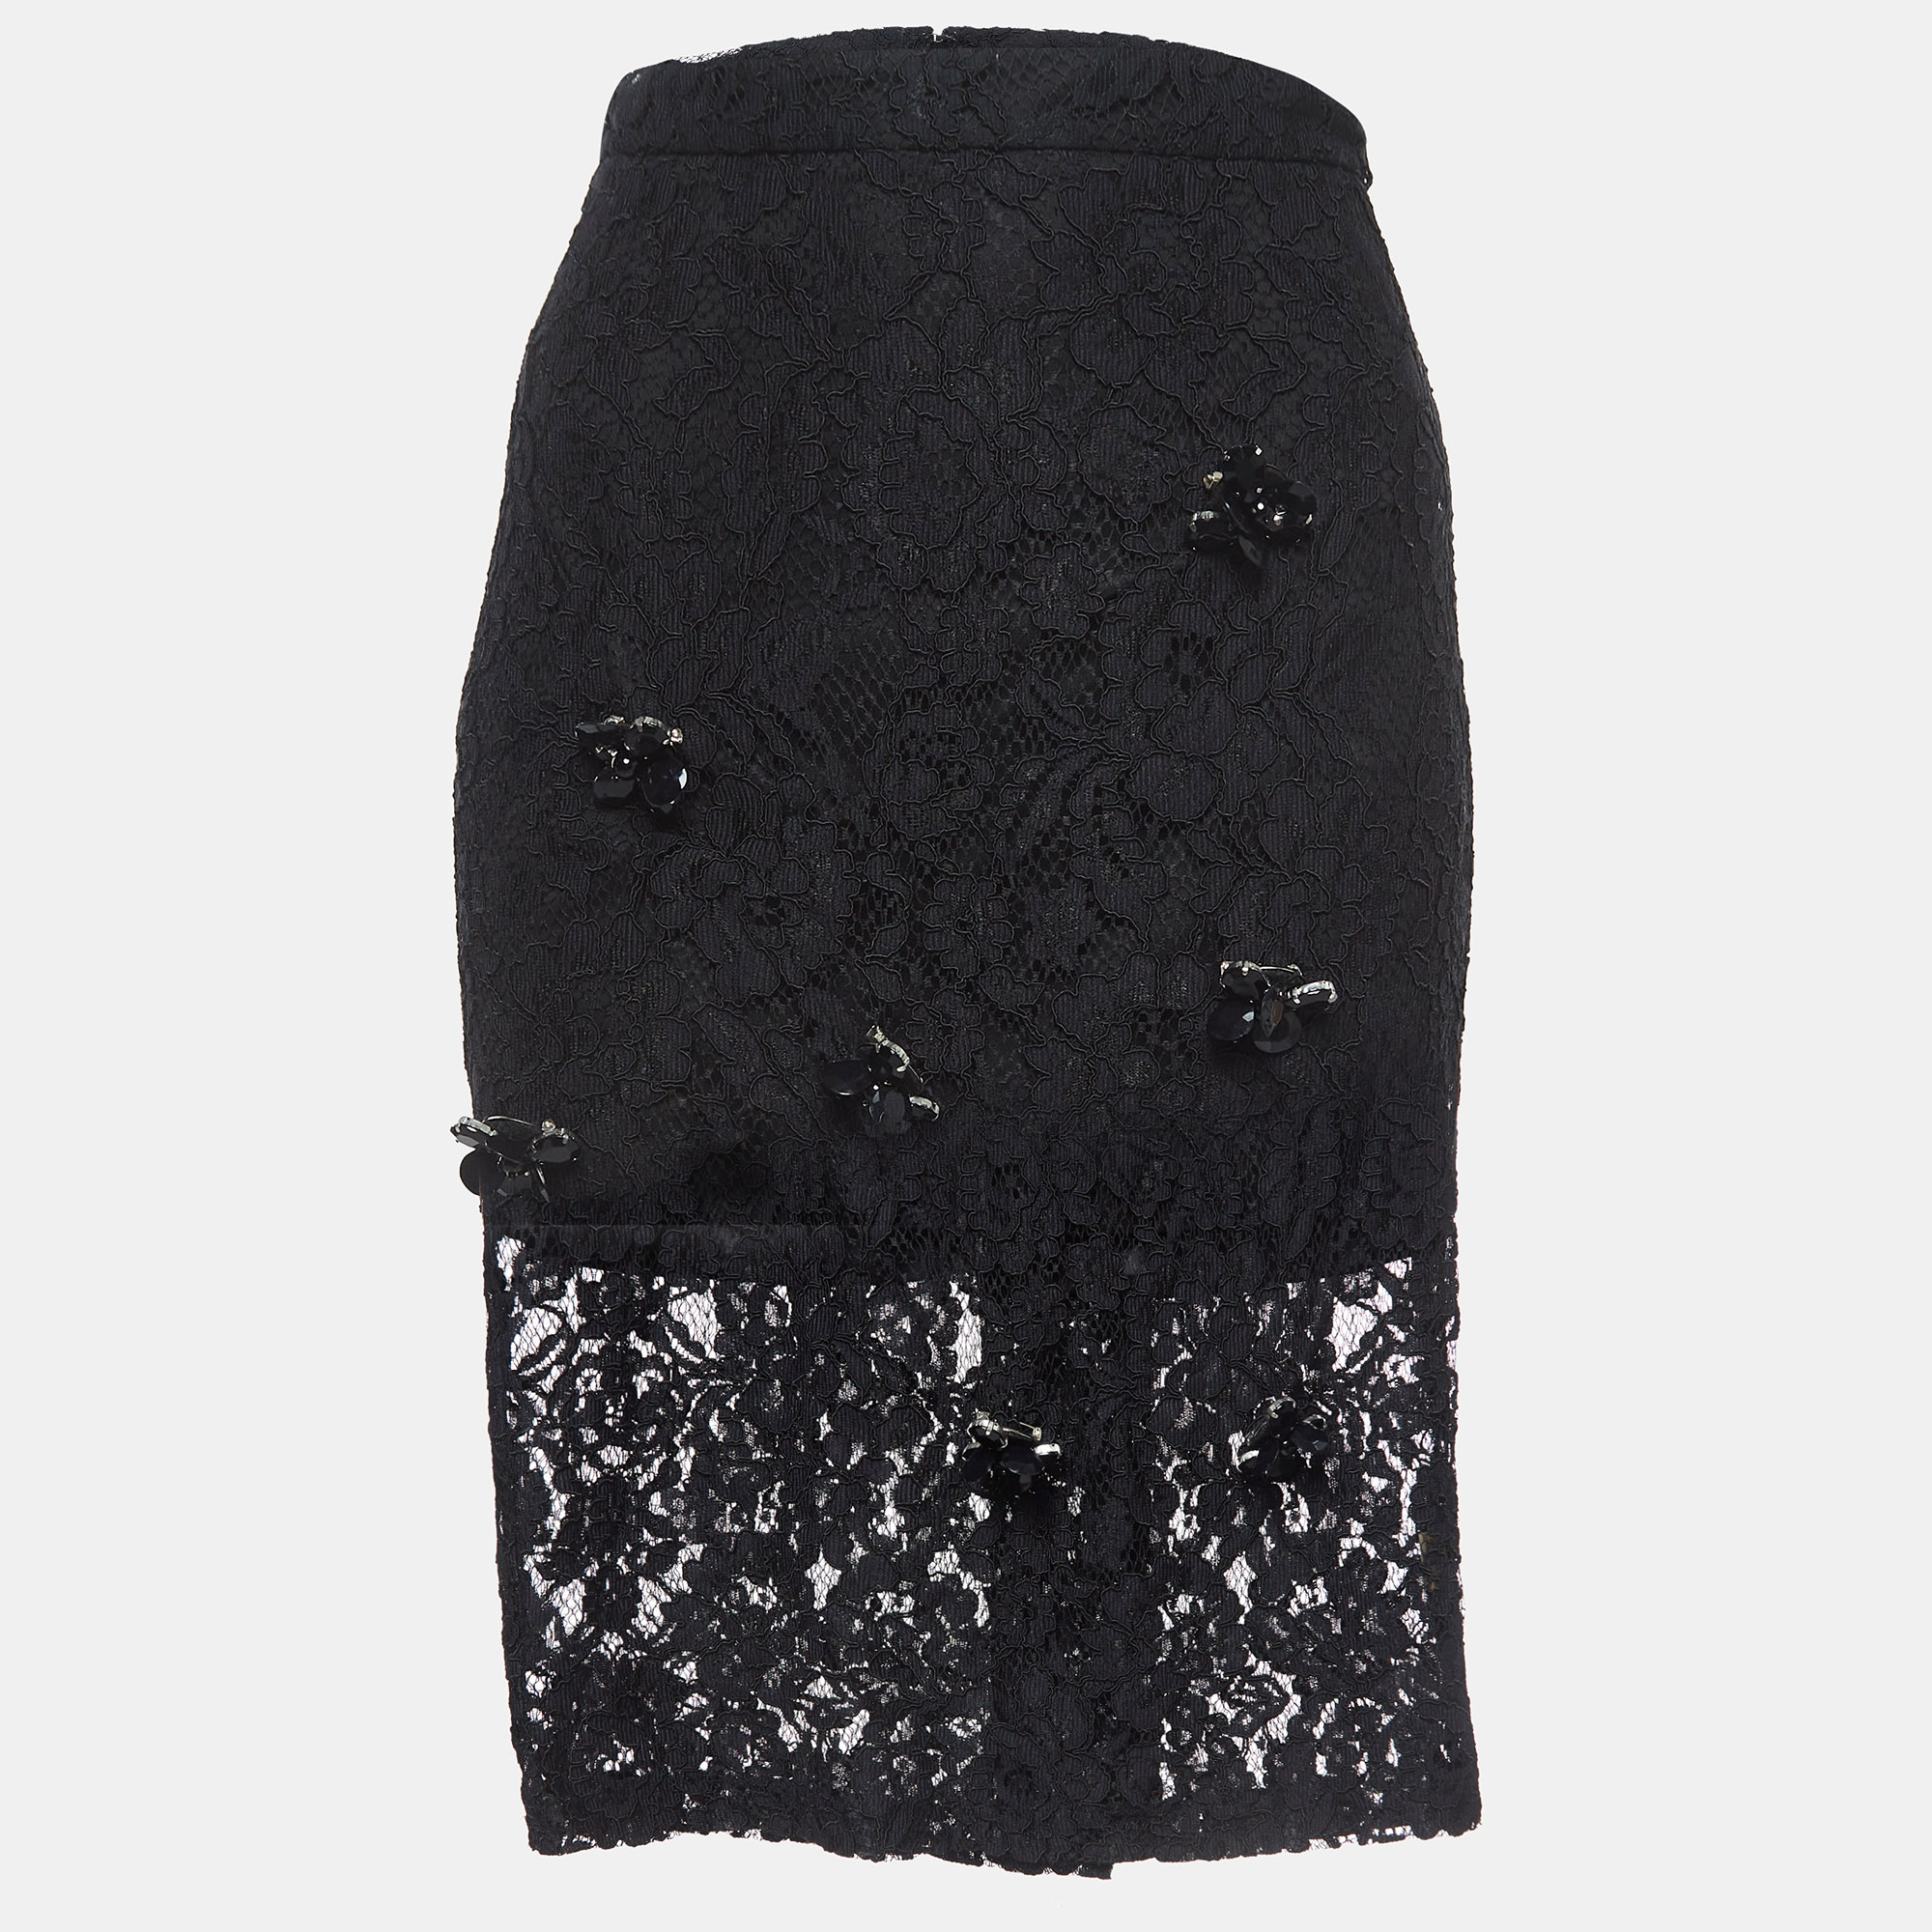 Alexis black brooch embellished lace pencil skirt m